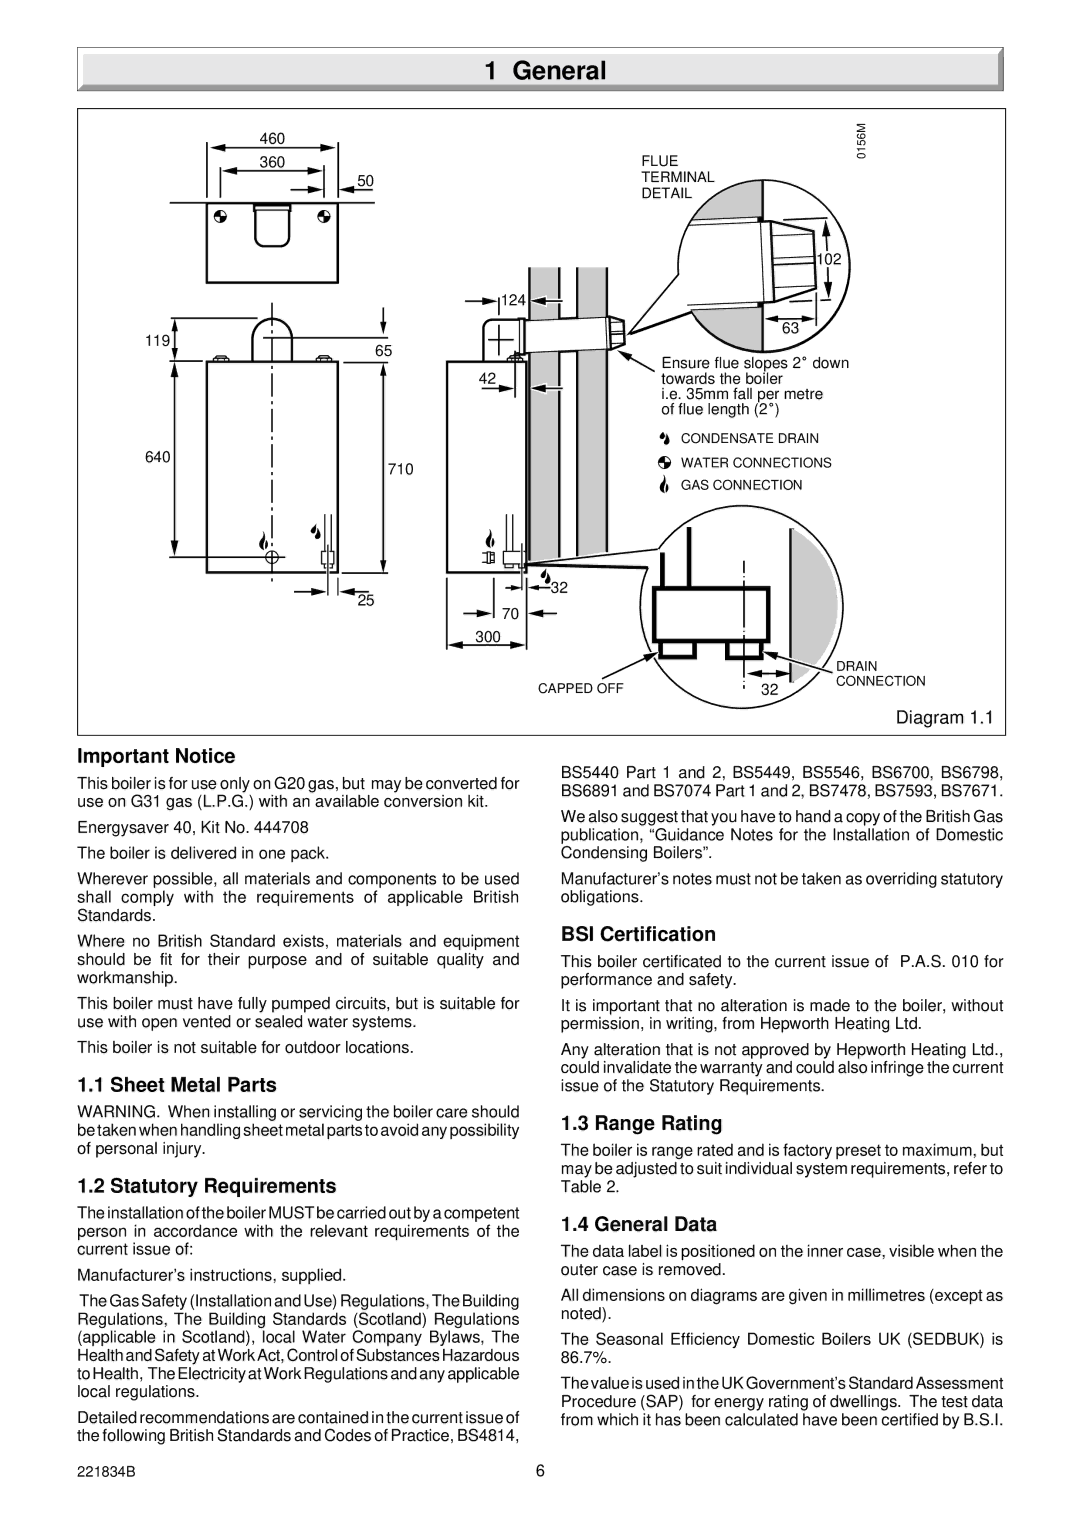 Glowworm Lighting 40 manual Sheet Metal Parts Statutory Requirements, BSI Certification, Range Rating, General Data 